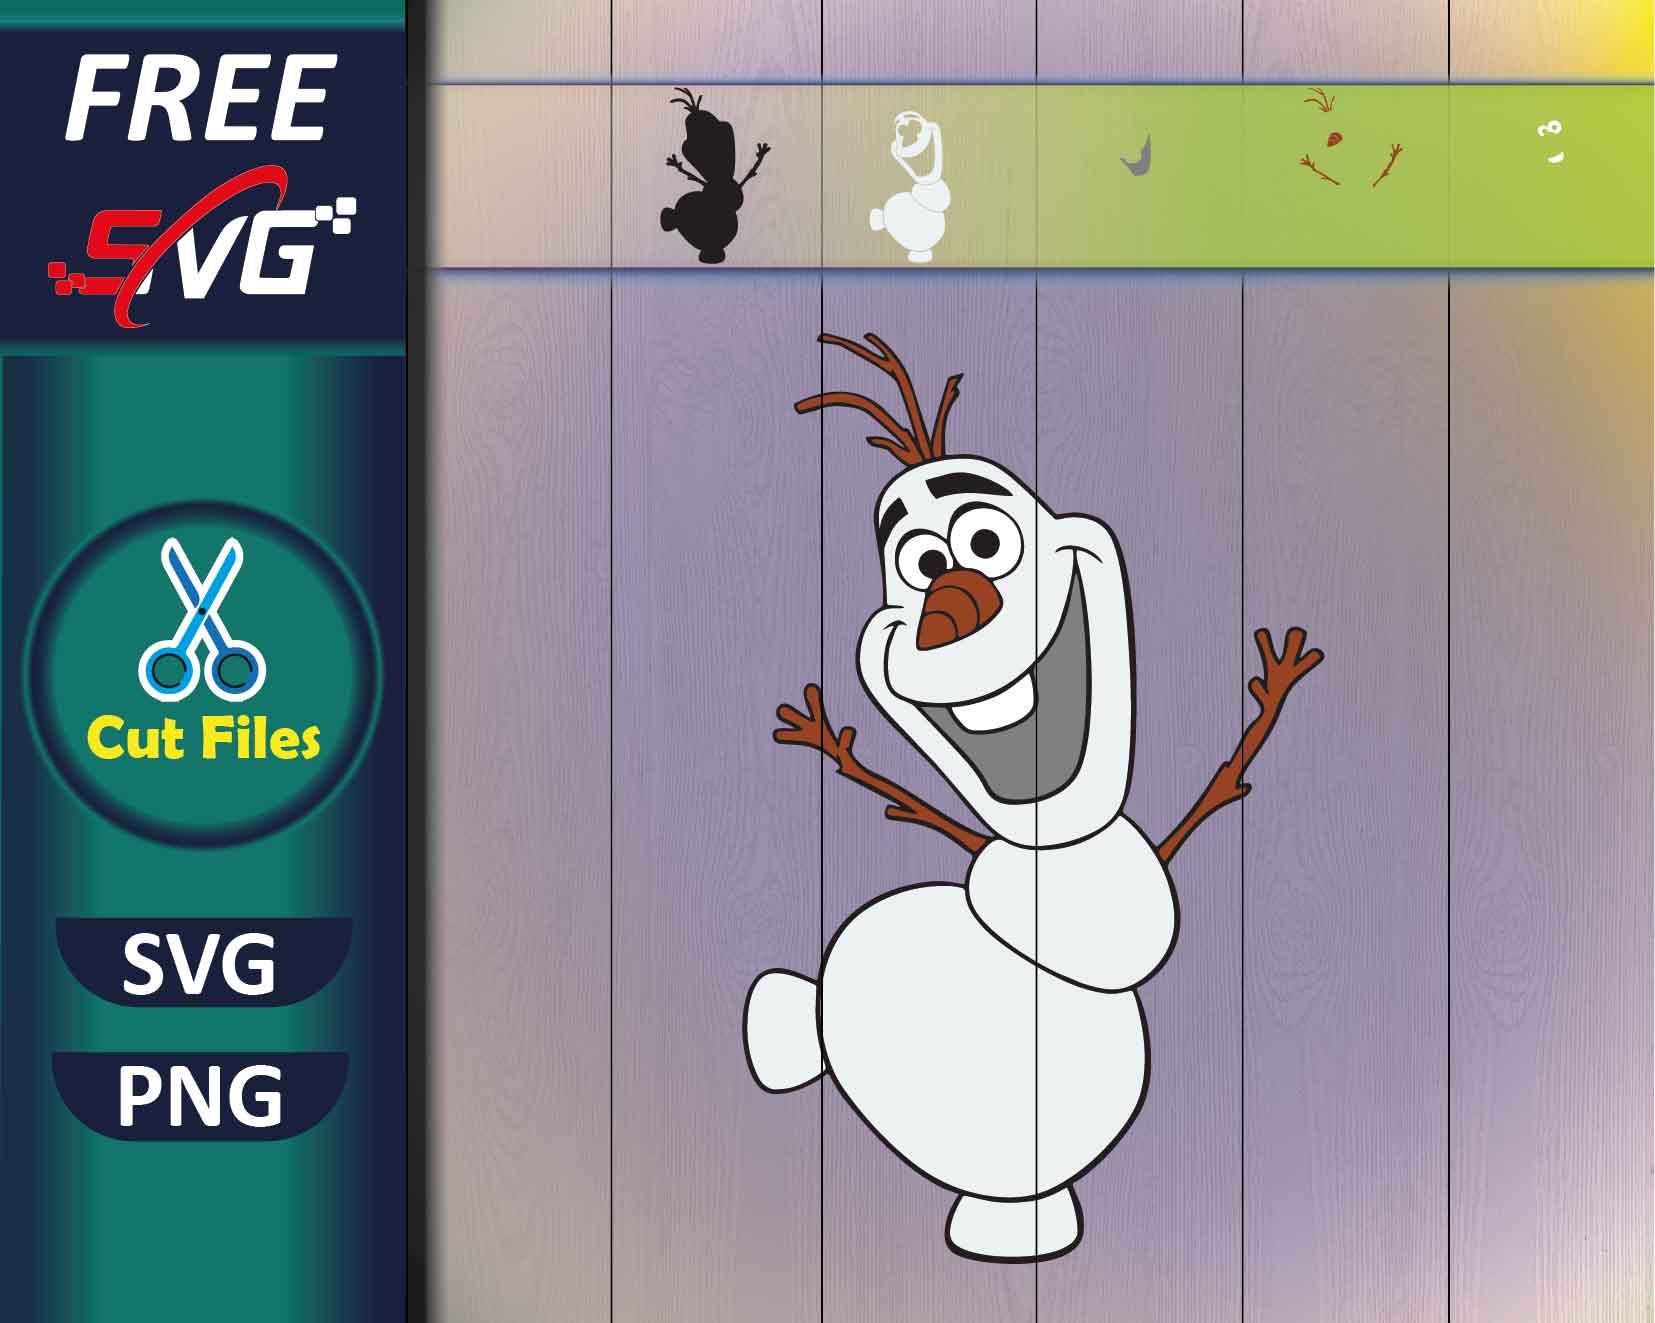 Frozen Olaf SVG Free Download